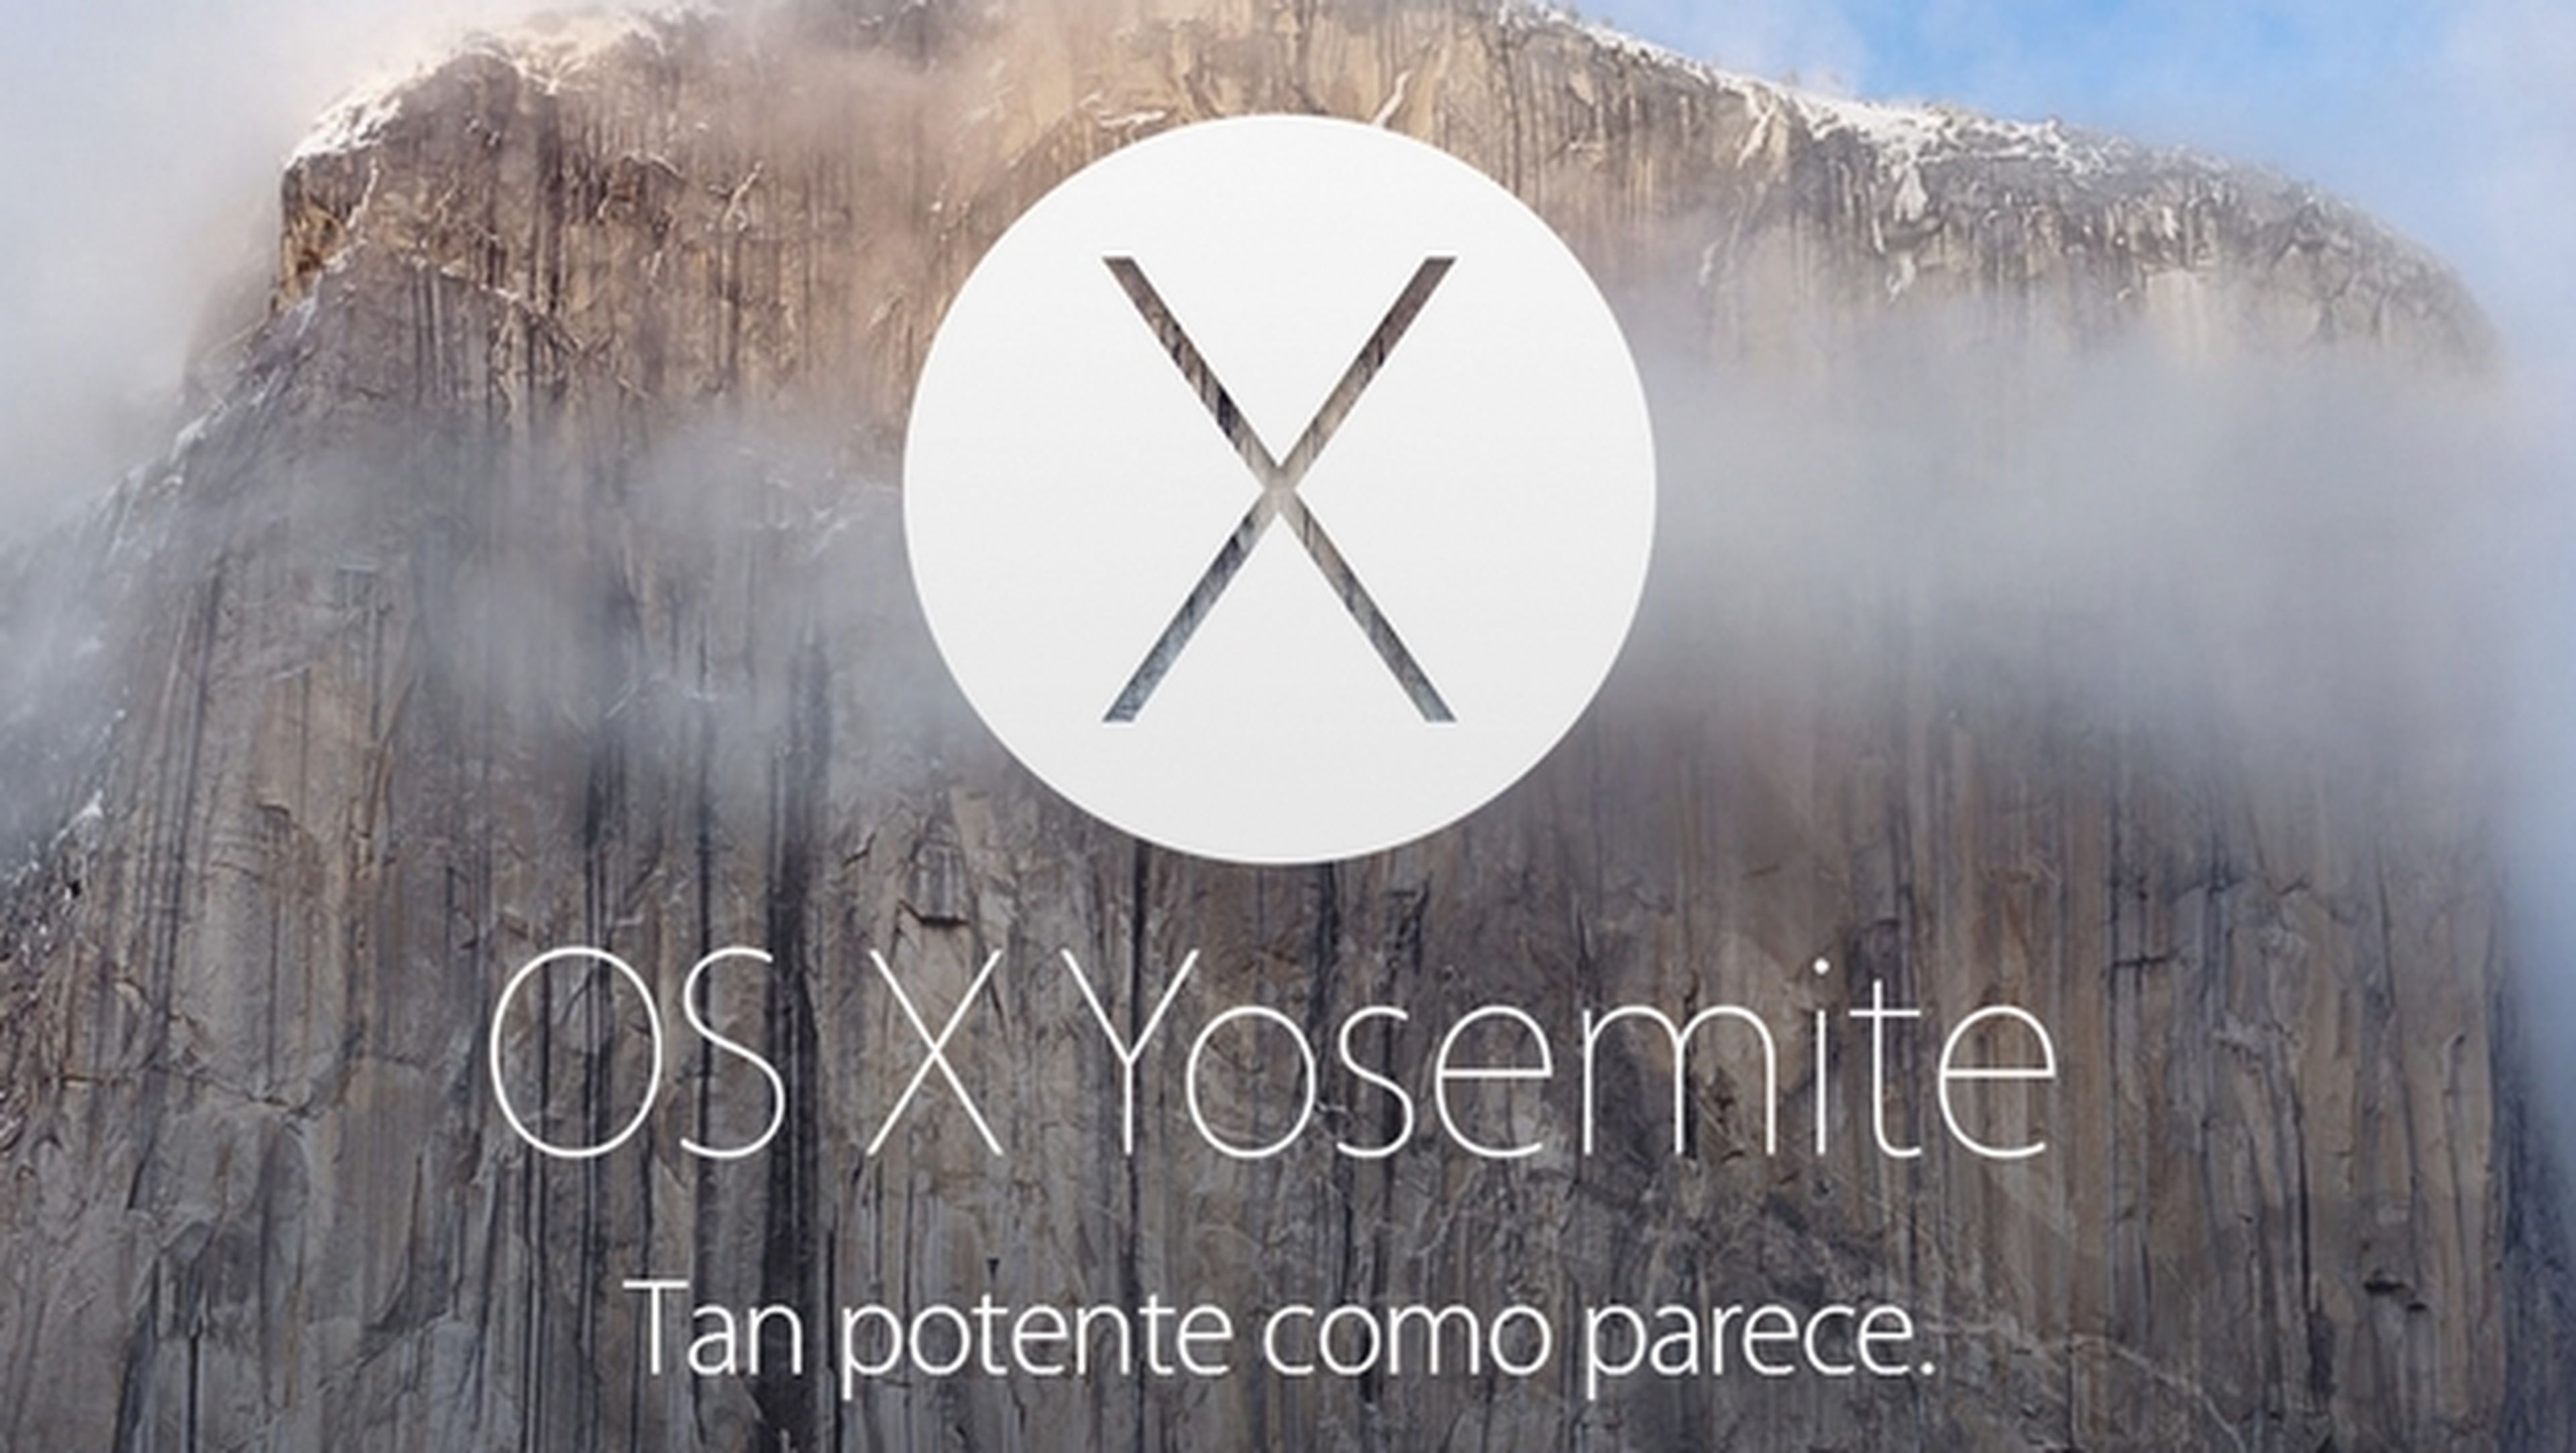 La beta pública de OS X Yosemite, mañana 24 de julio